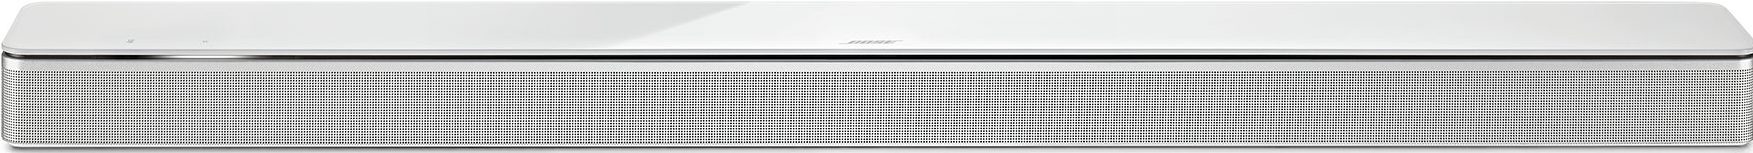 Bose Soundbar 700 in white on a white background